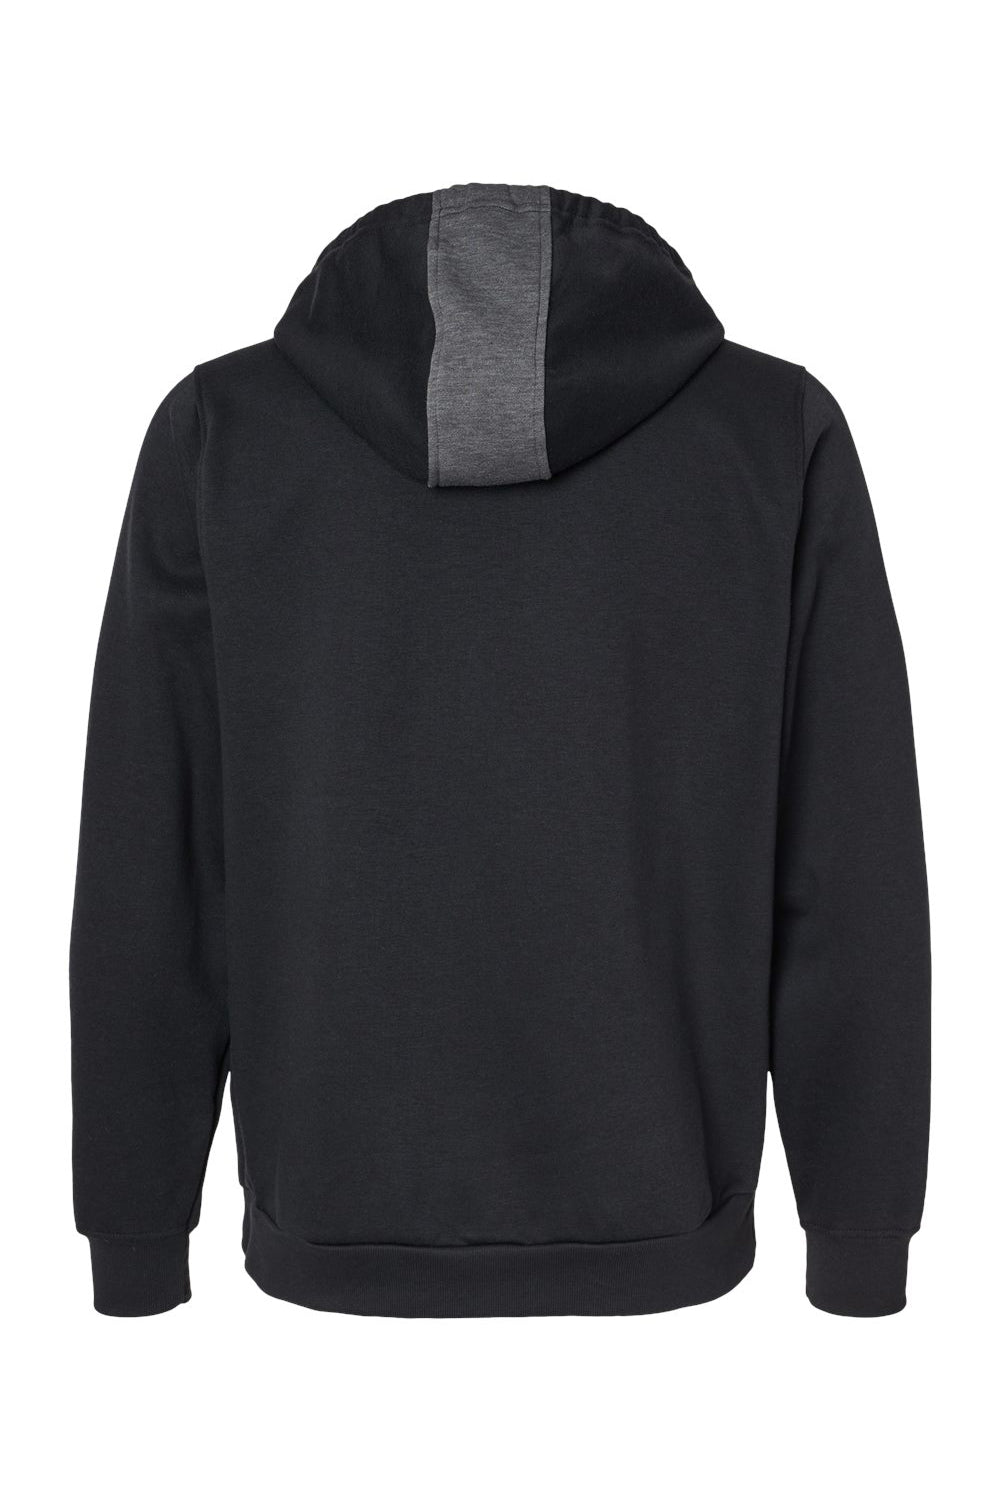 Augusta Sportswear 6865 Mens Eco Revive 3 Season Fleece Hooded Sweatshirt Hoodie Heather Carbon Grey/Black Flat Back